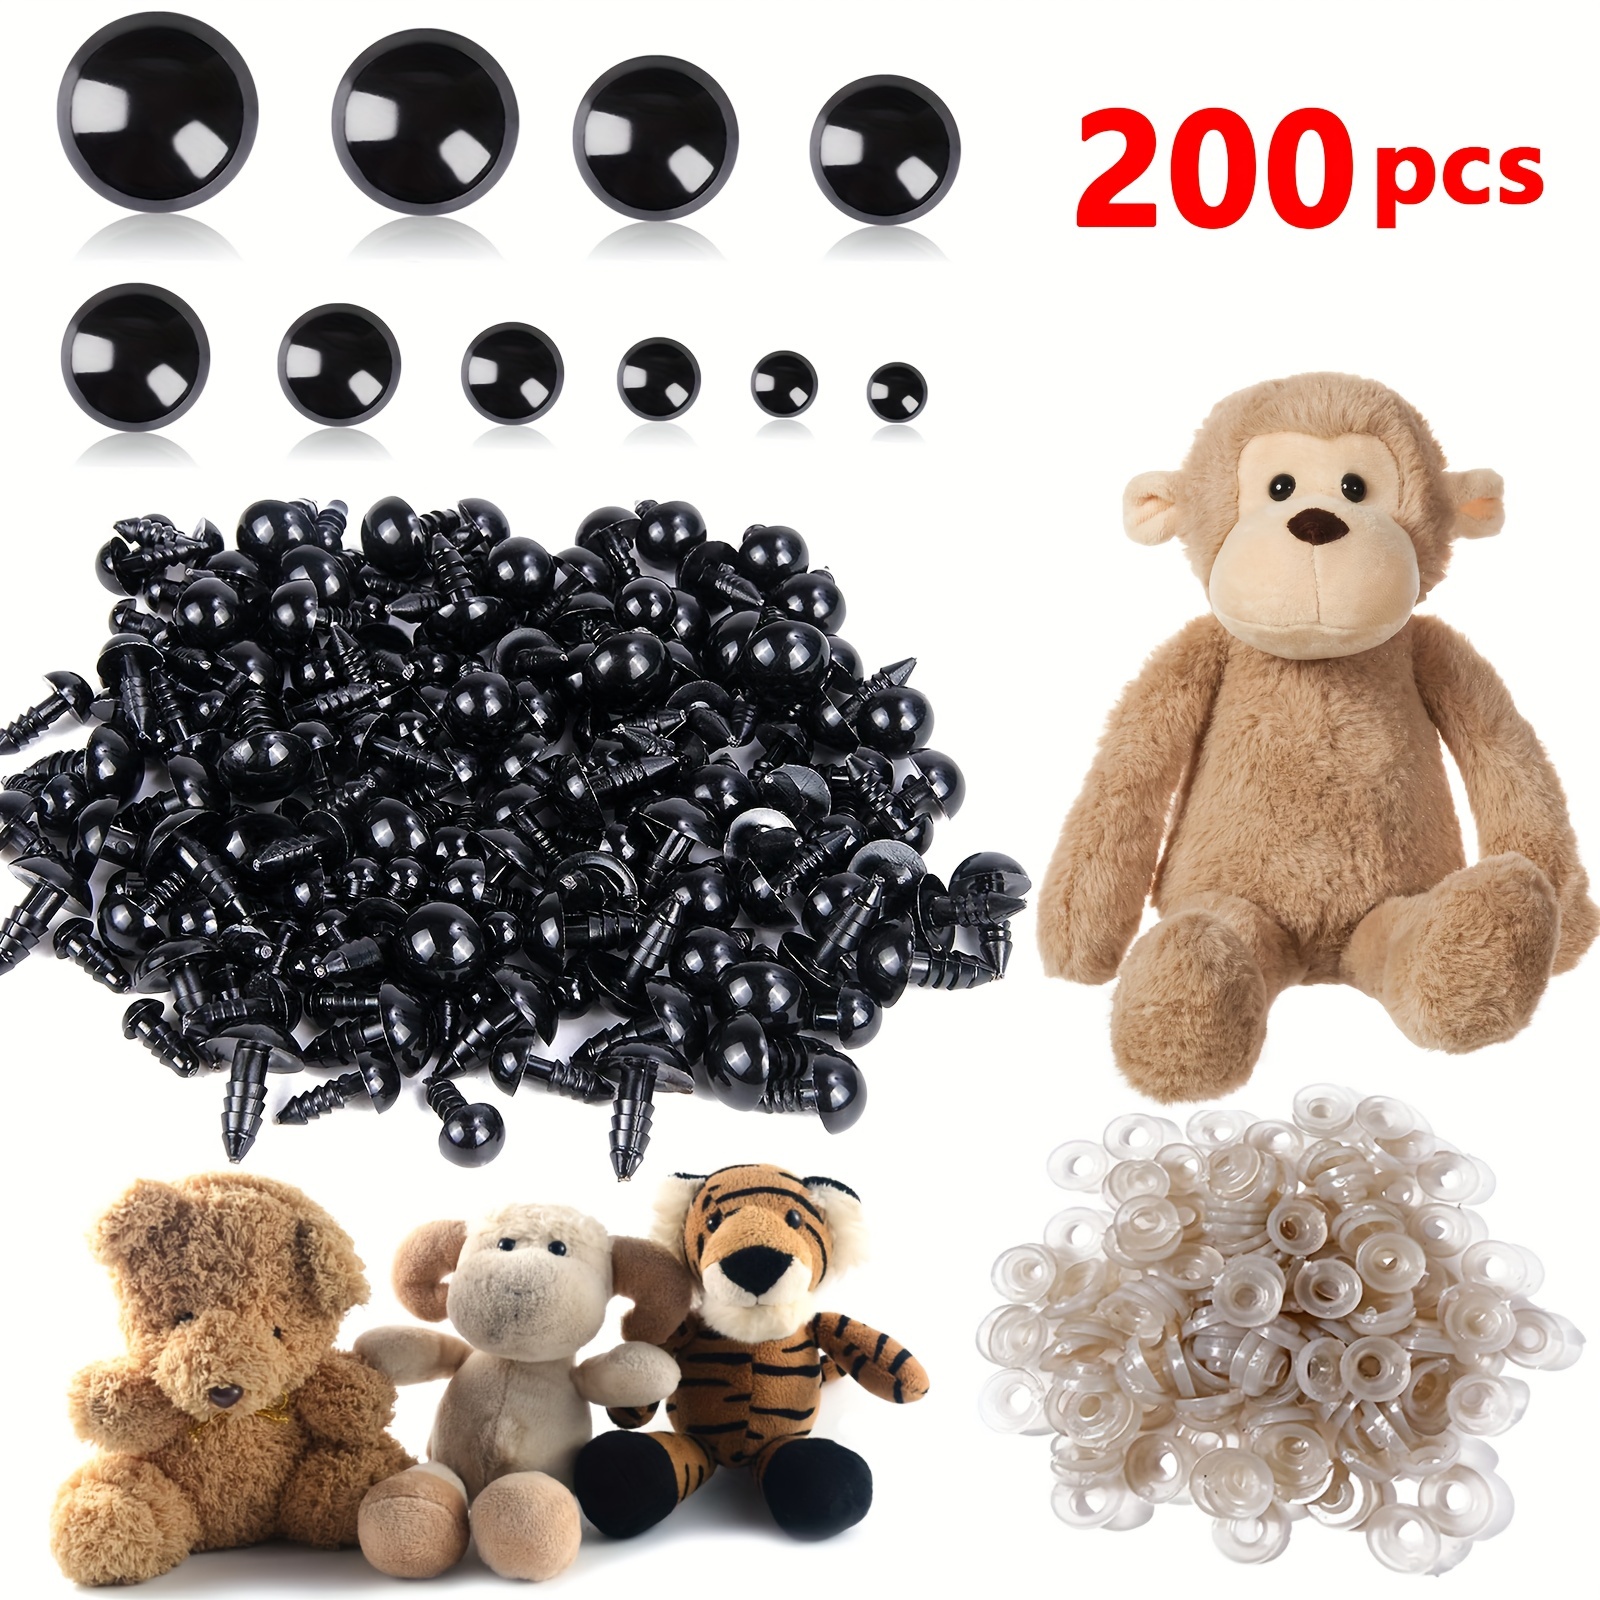 200pcs Black Kawaii Safety Eyes Oval Crochet Eyes Stuffed Animal